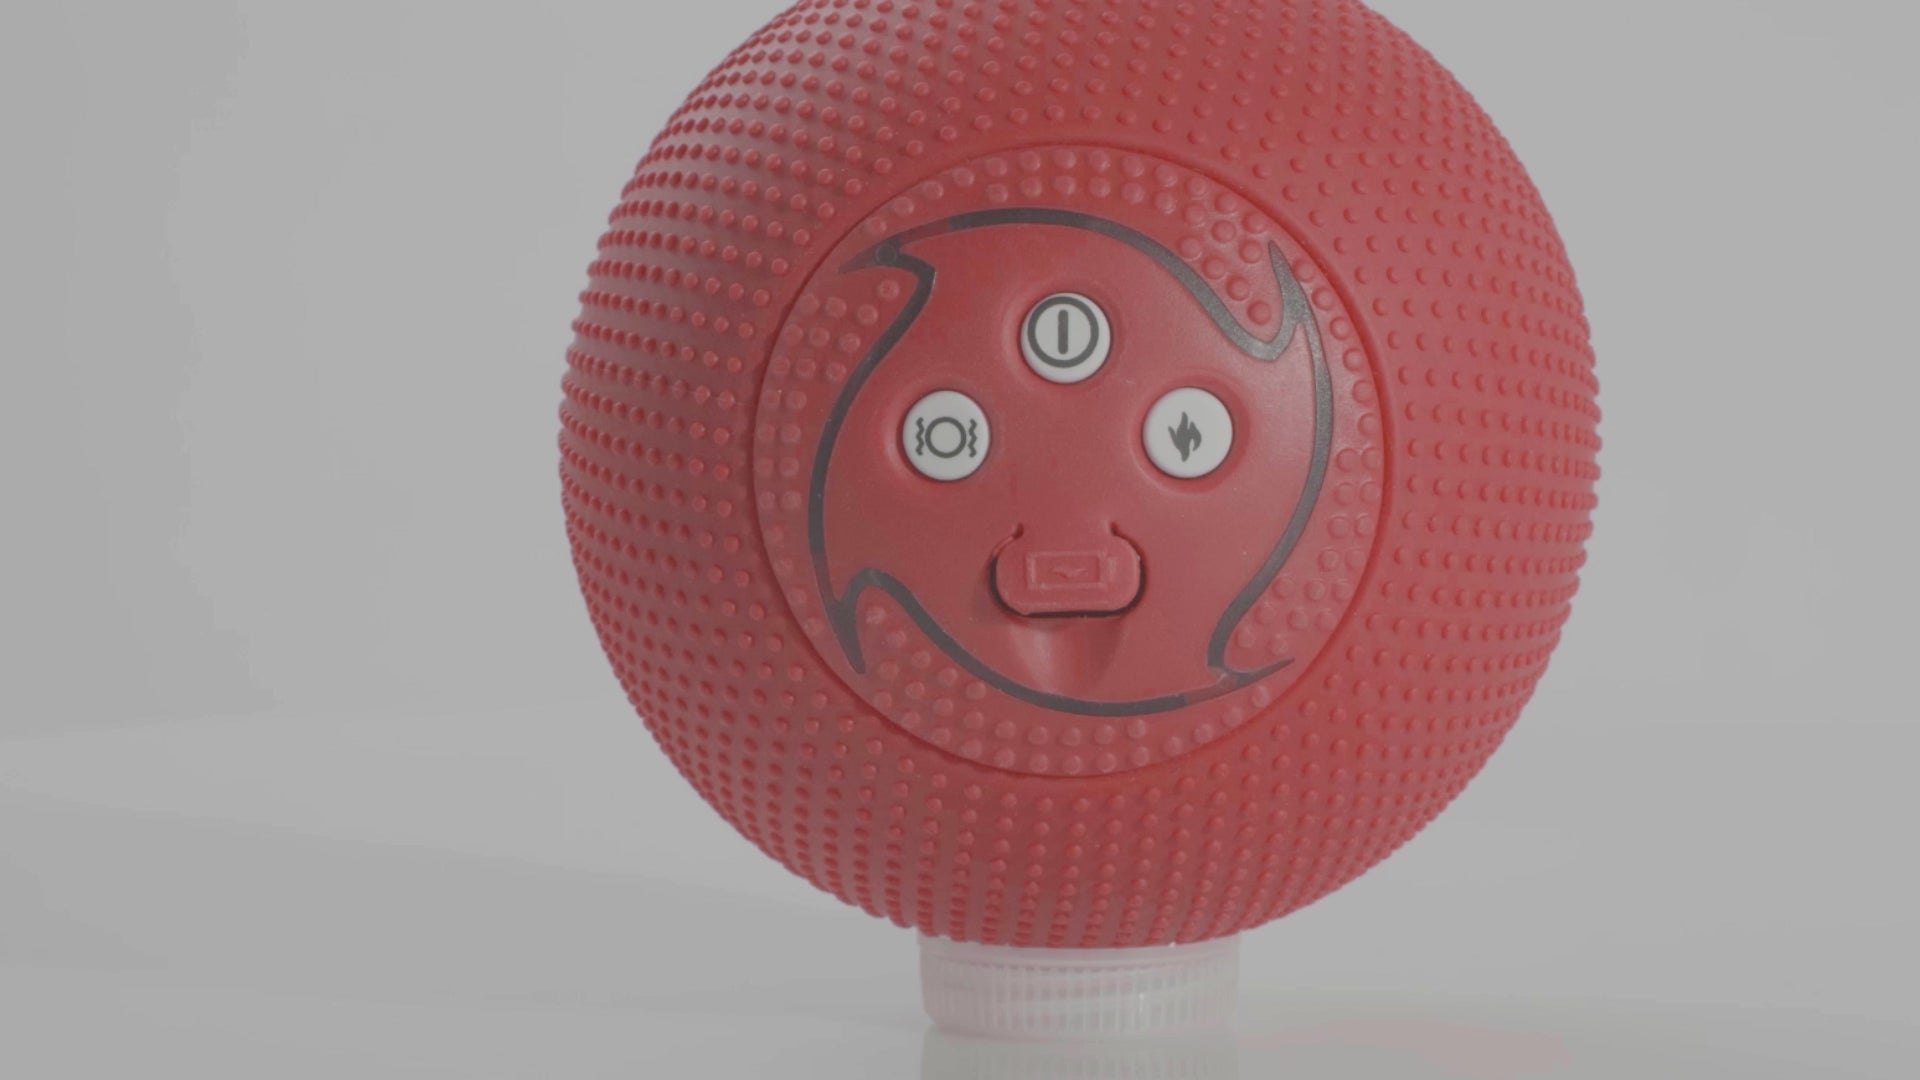 Myostorm Meteor MIni Video Heated Research Backed Vibration Massage Ball